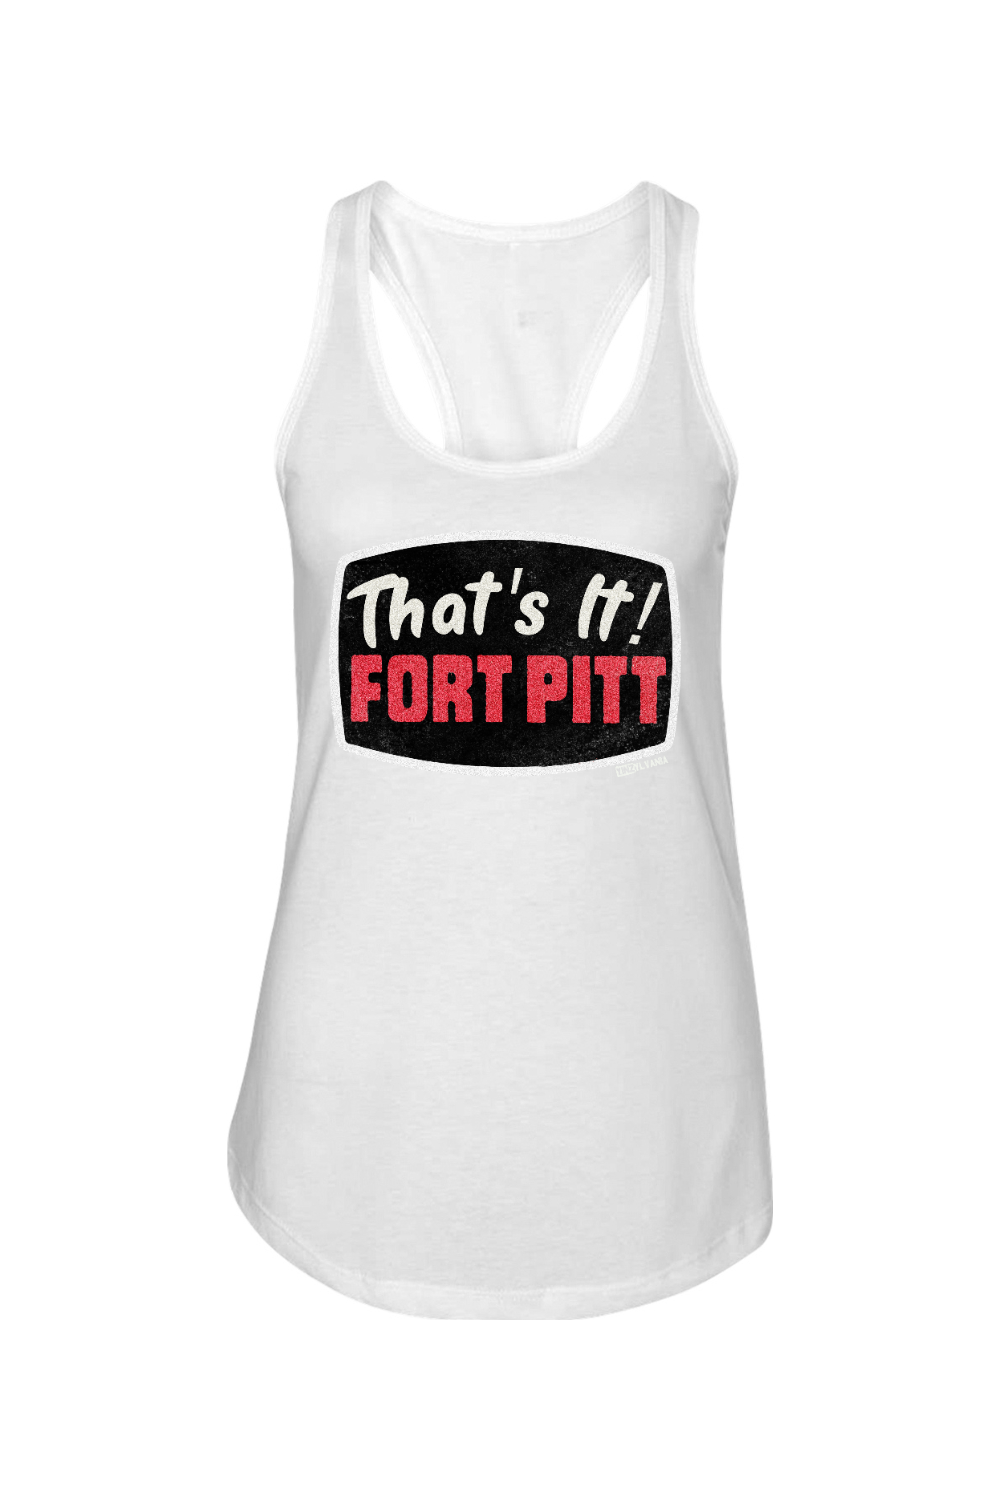 That's It Fort Pitt - Next Level Ladies Racerback Tank - Yinzylvania